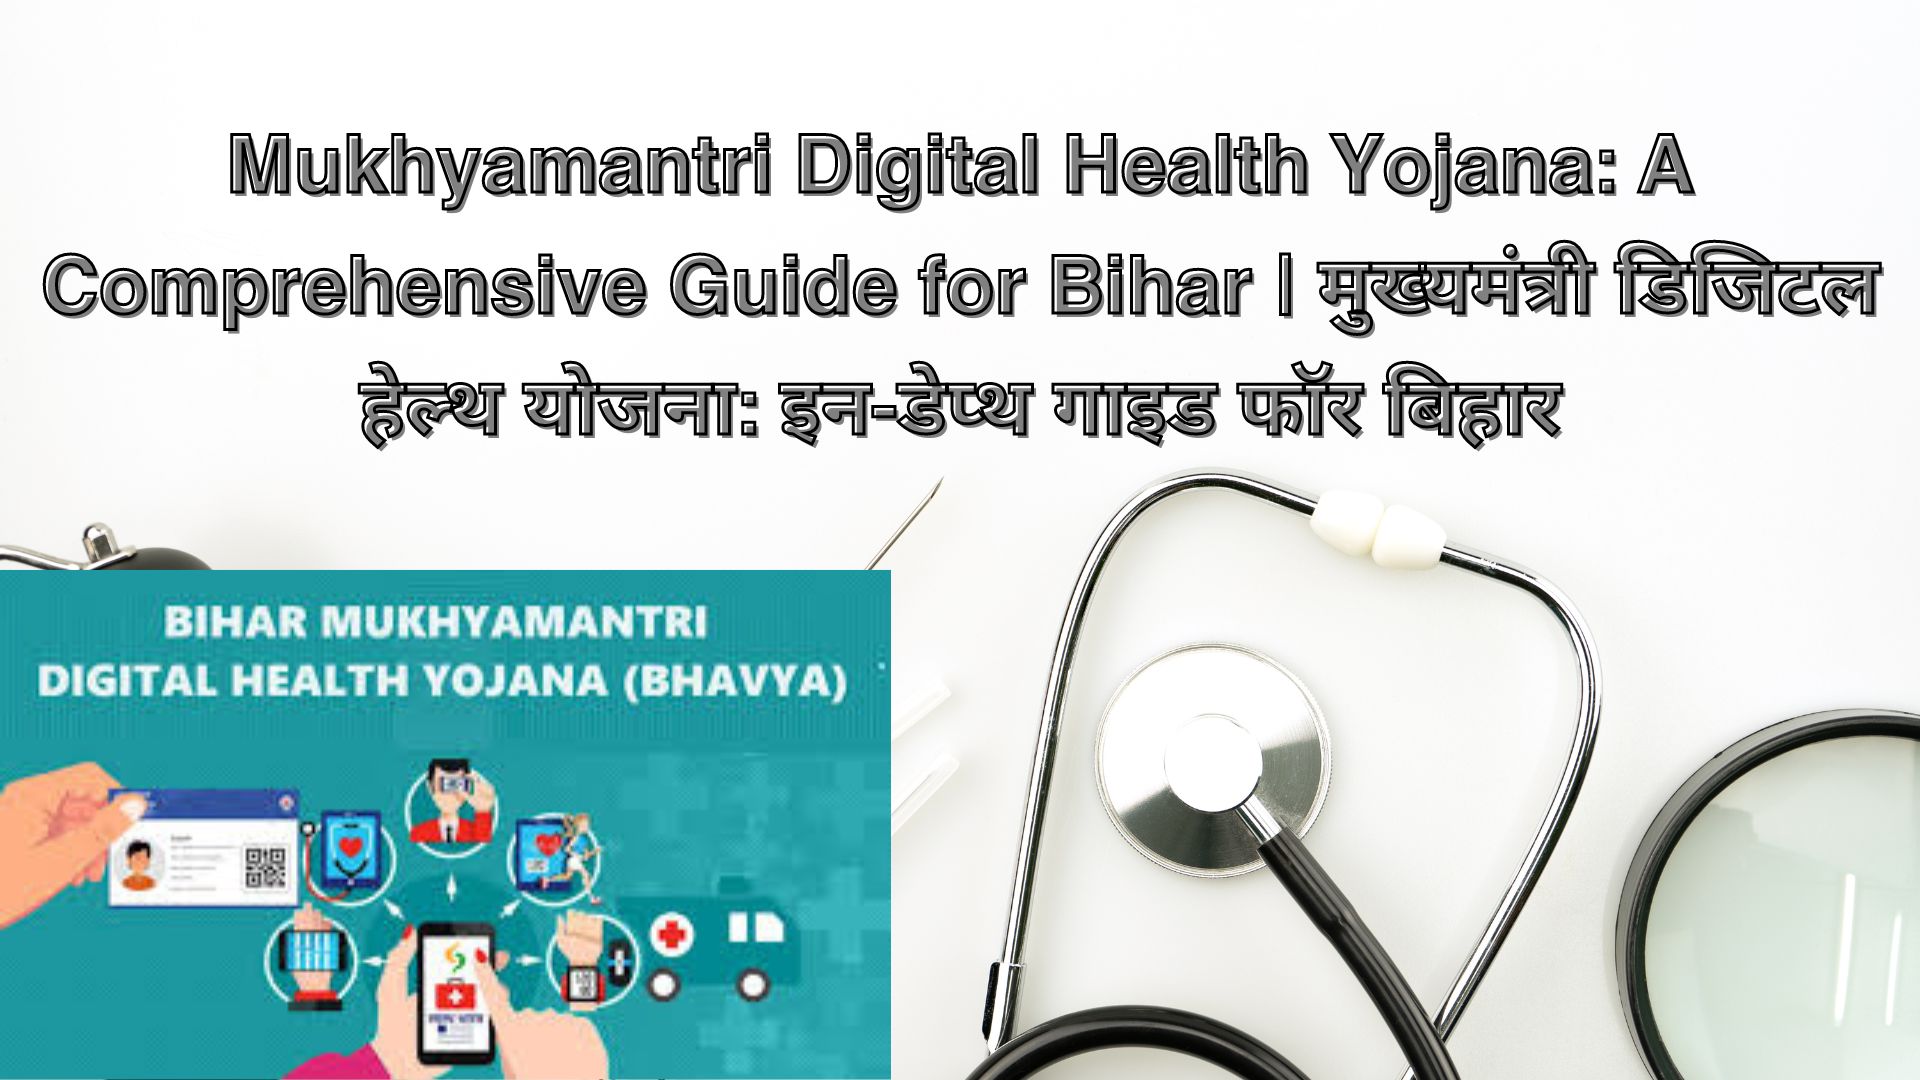 Mukhyamantri Digital Health Yojana: A Comprehensive Guide for Bihar | मुख्यमंत्री डिजिटल हेल्थ योजना: इन-डेप्थ गाइड फॉर बिहार